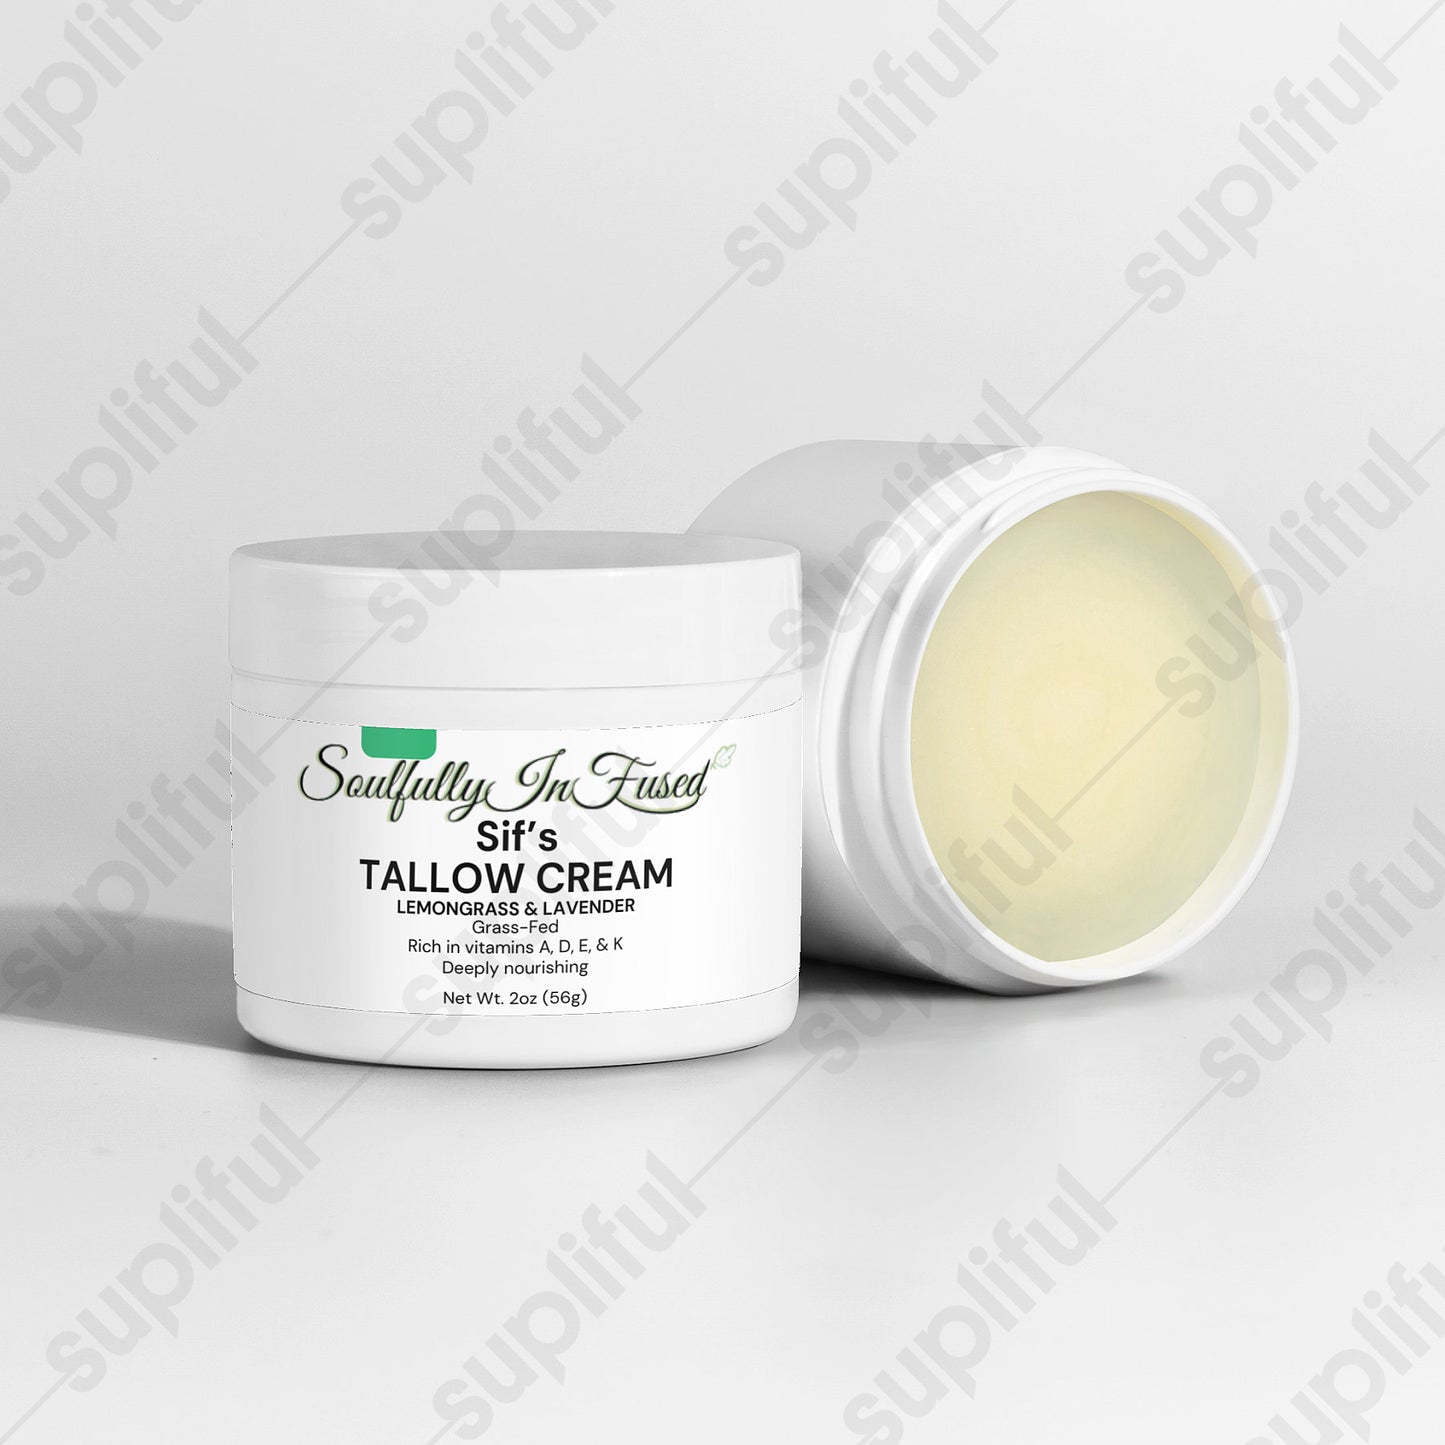 Sif's Tallow Cream Lemongrass & Lavender